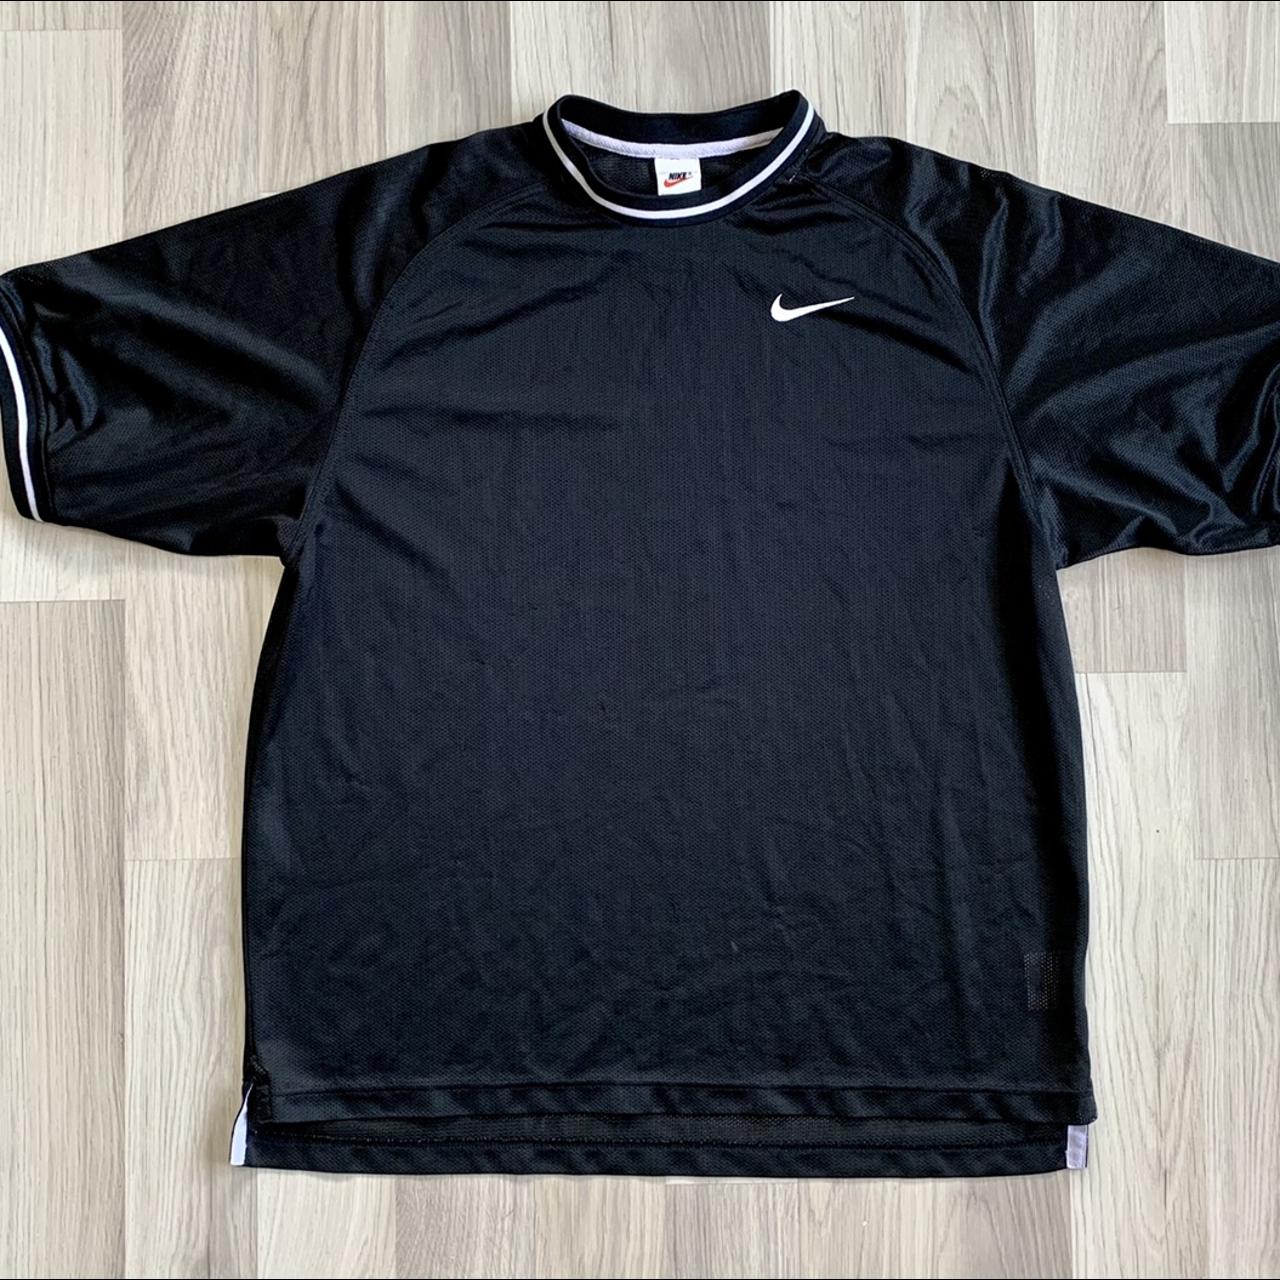 Vintage 90s Nike Black/White Soccer Jersey. Size... - Depop